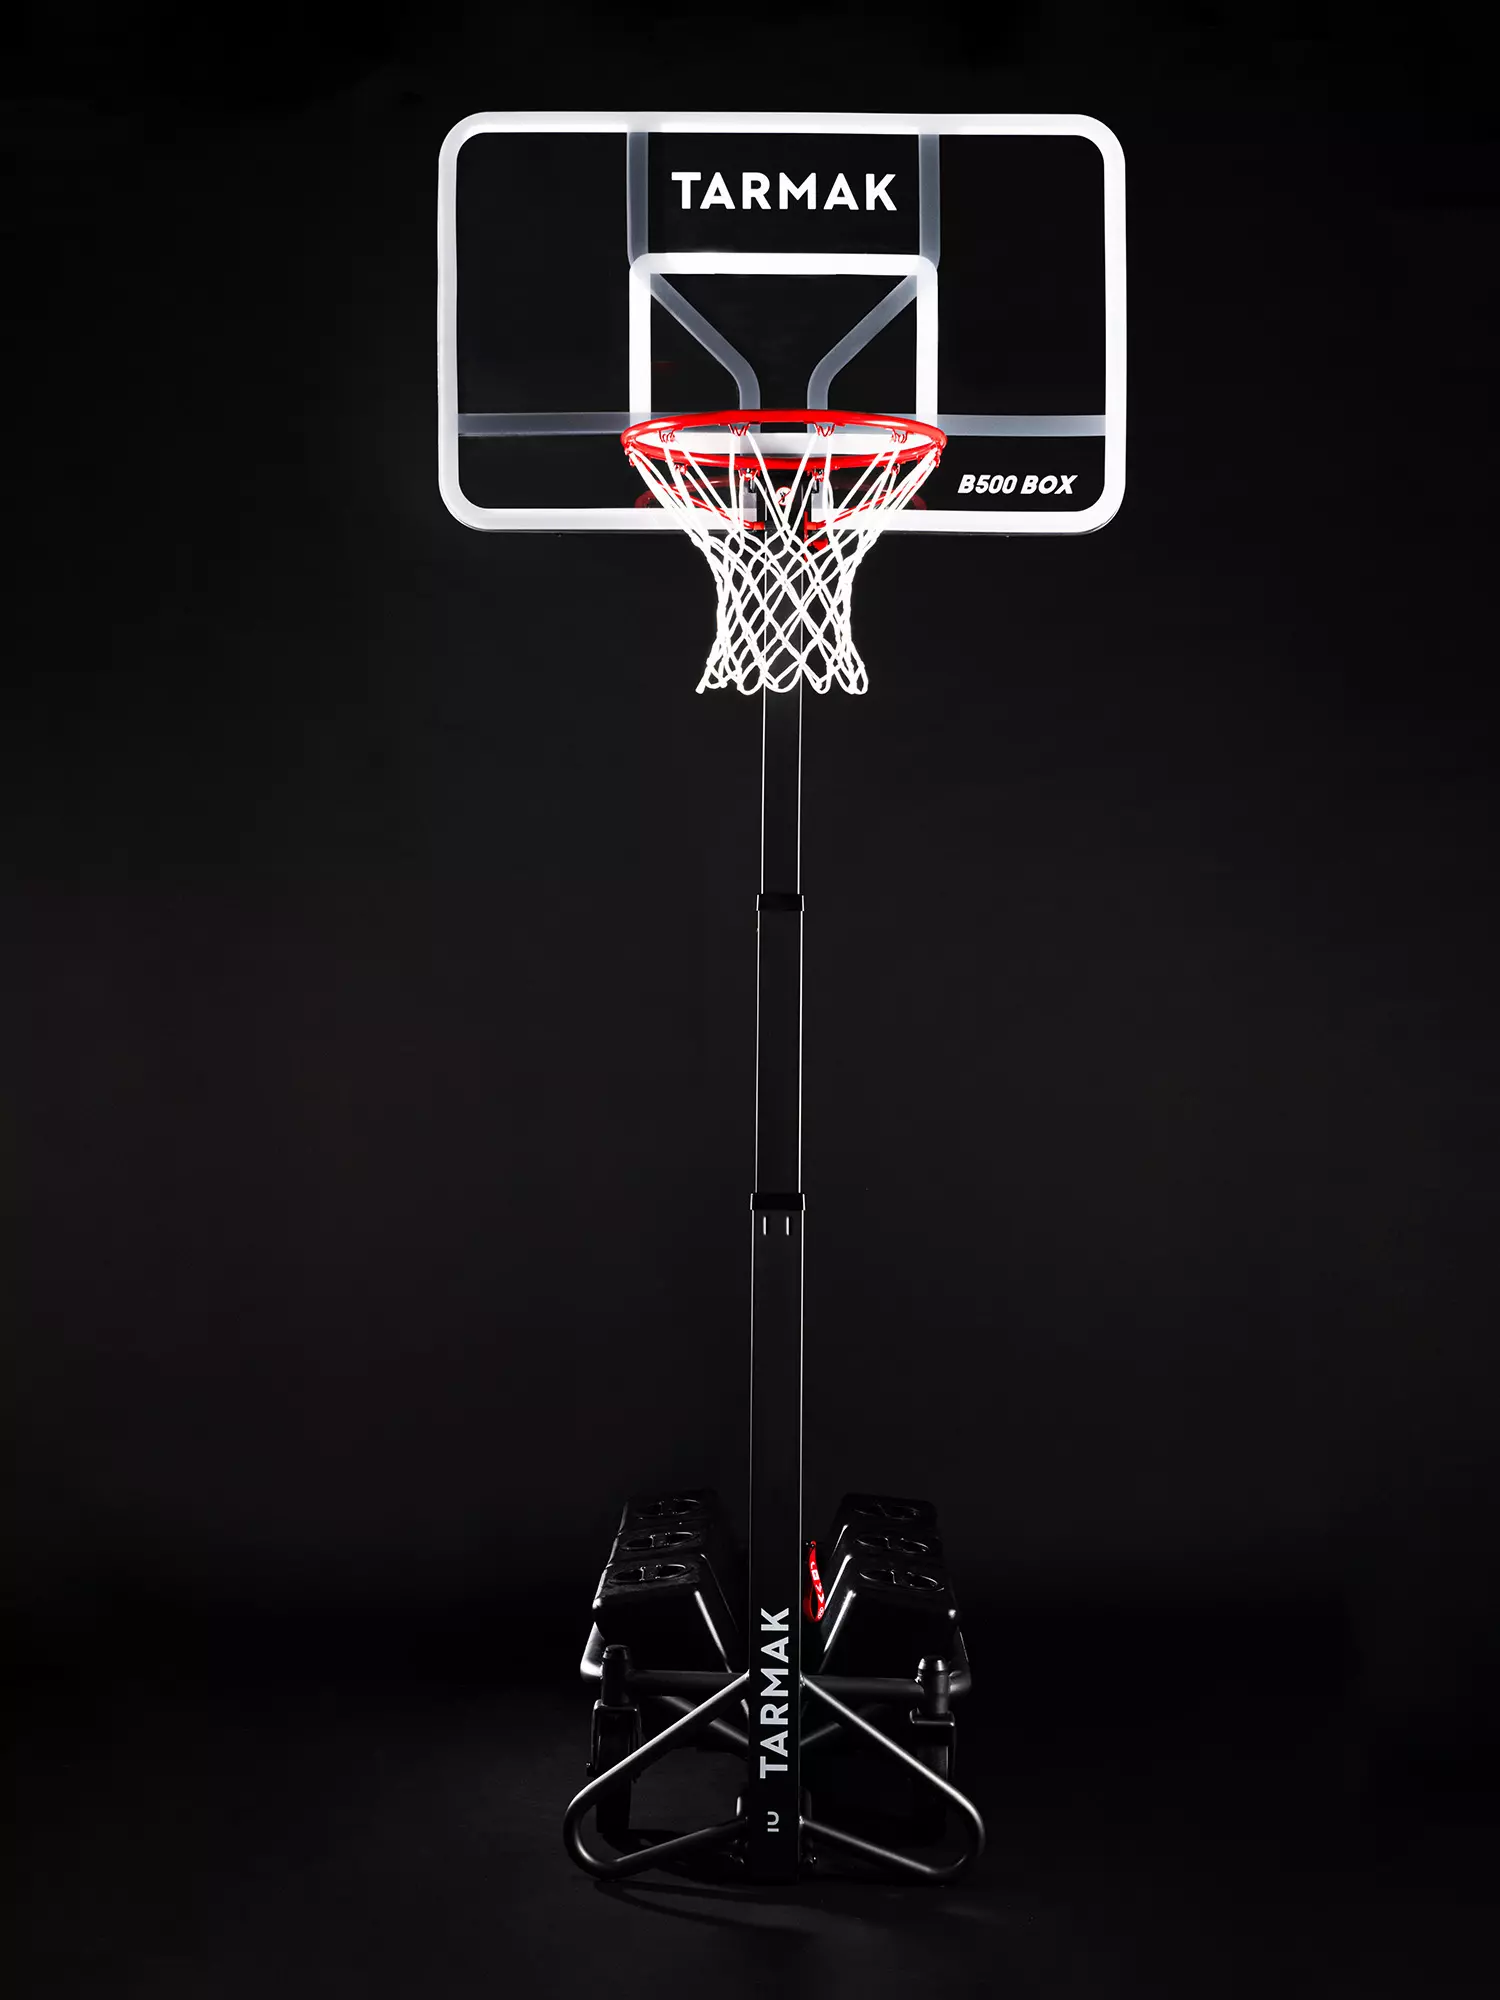 Adult Basketball Arm Sleeve E500 - NBA Golden State Warriors/Blue -  Decathlon